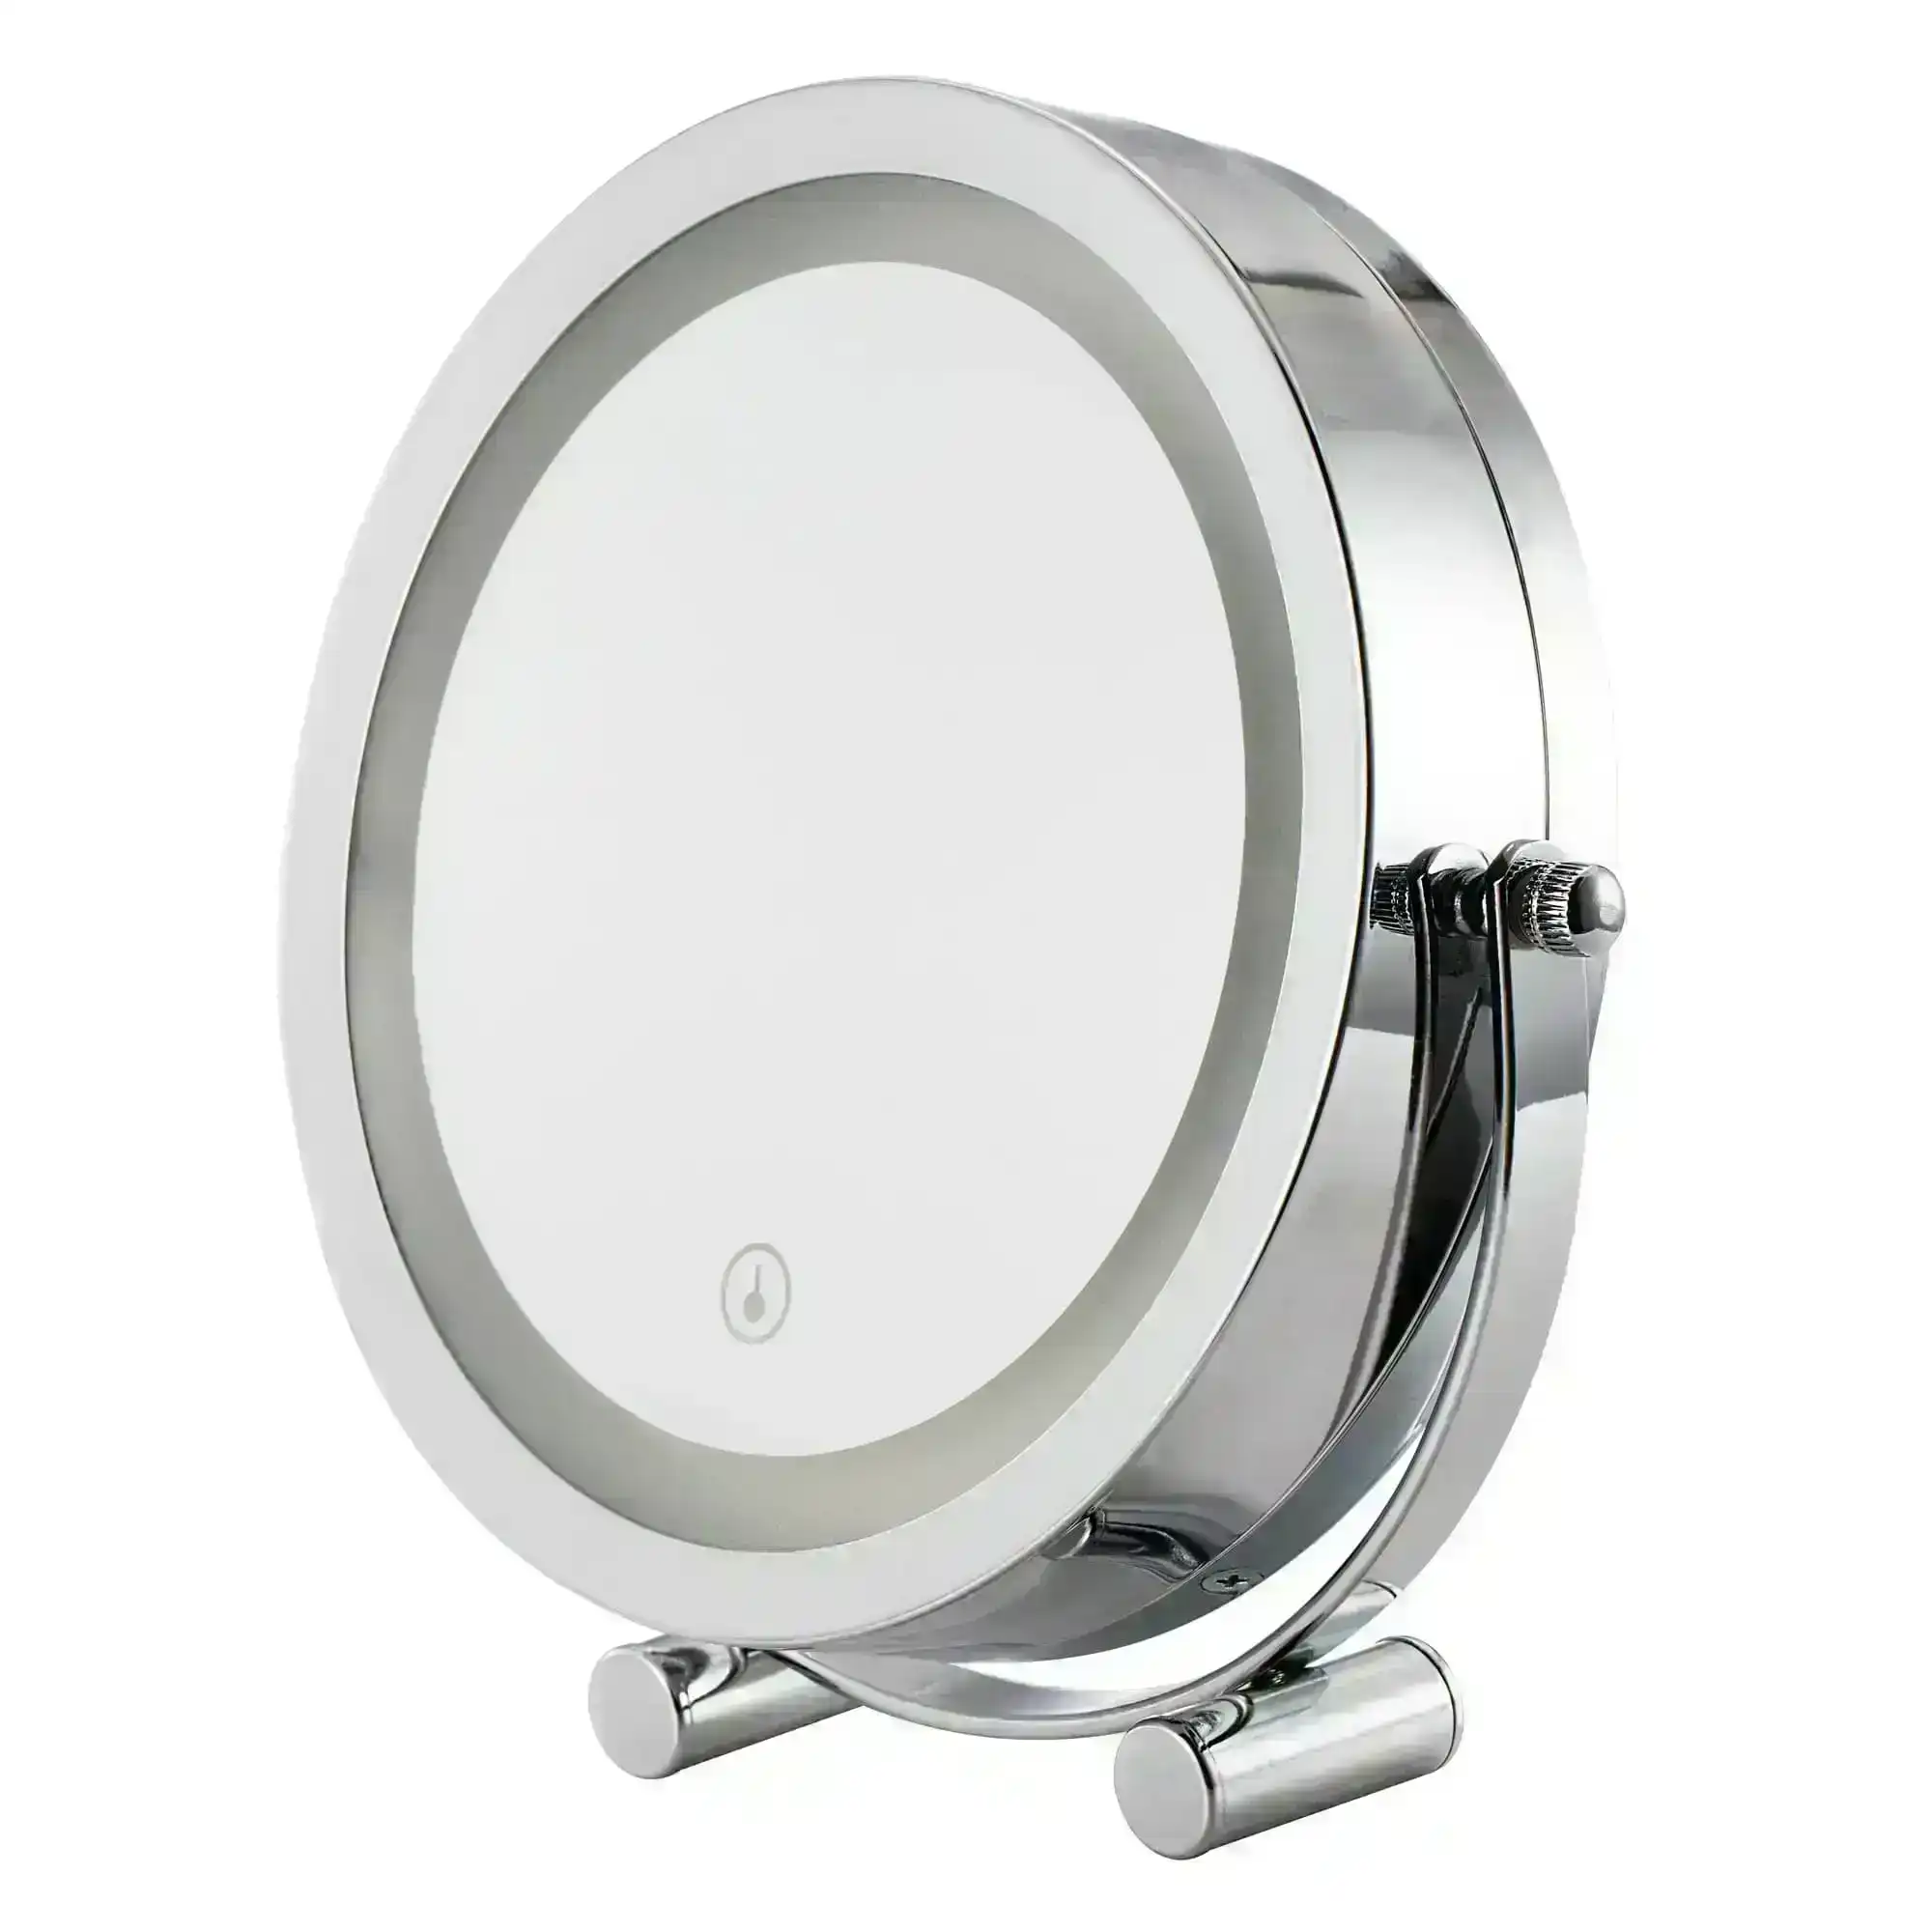 Clevinger San Marino 3x Magnifiying LED Illuminated Makeup Beauty Mirror